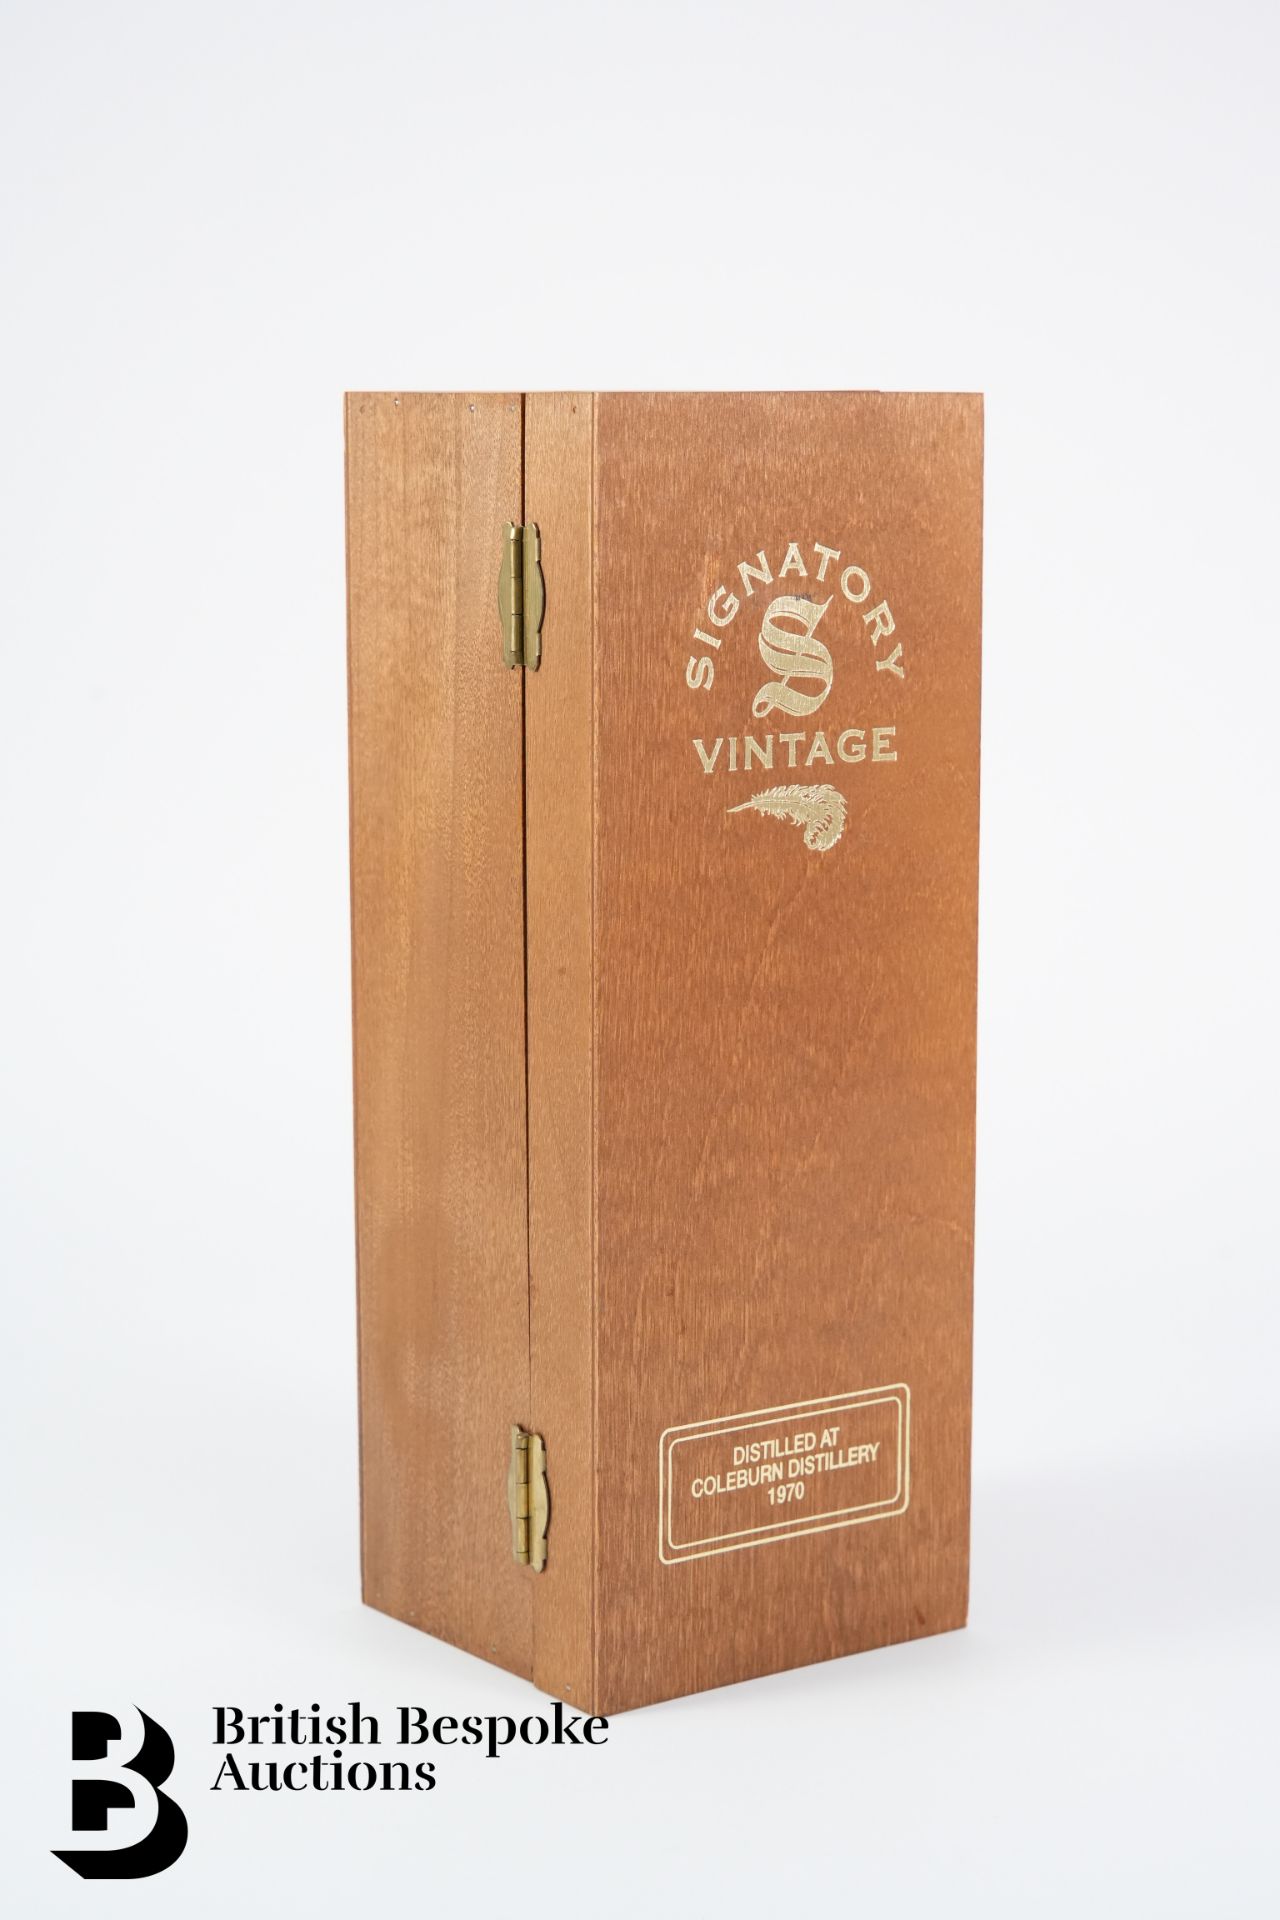 Coleburn 30 Year Old (1970) Signatory Vintage Whisky - Image 3 of 3